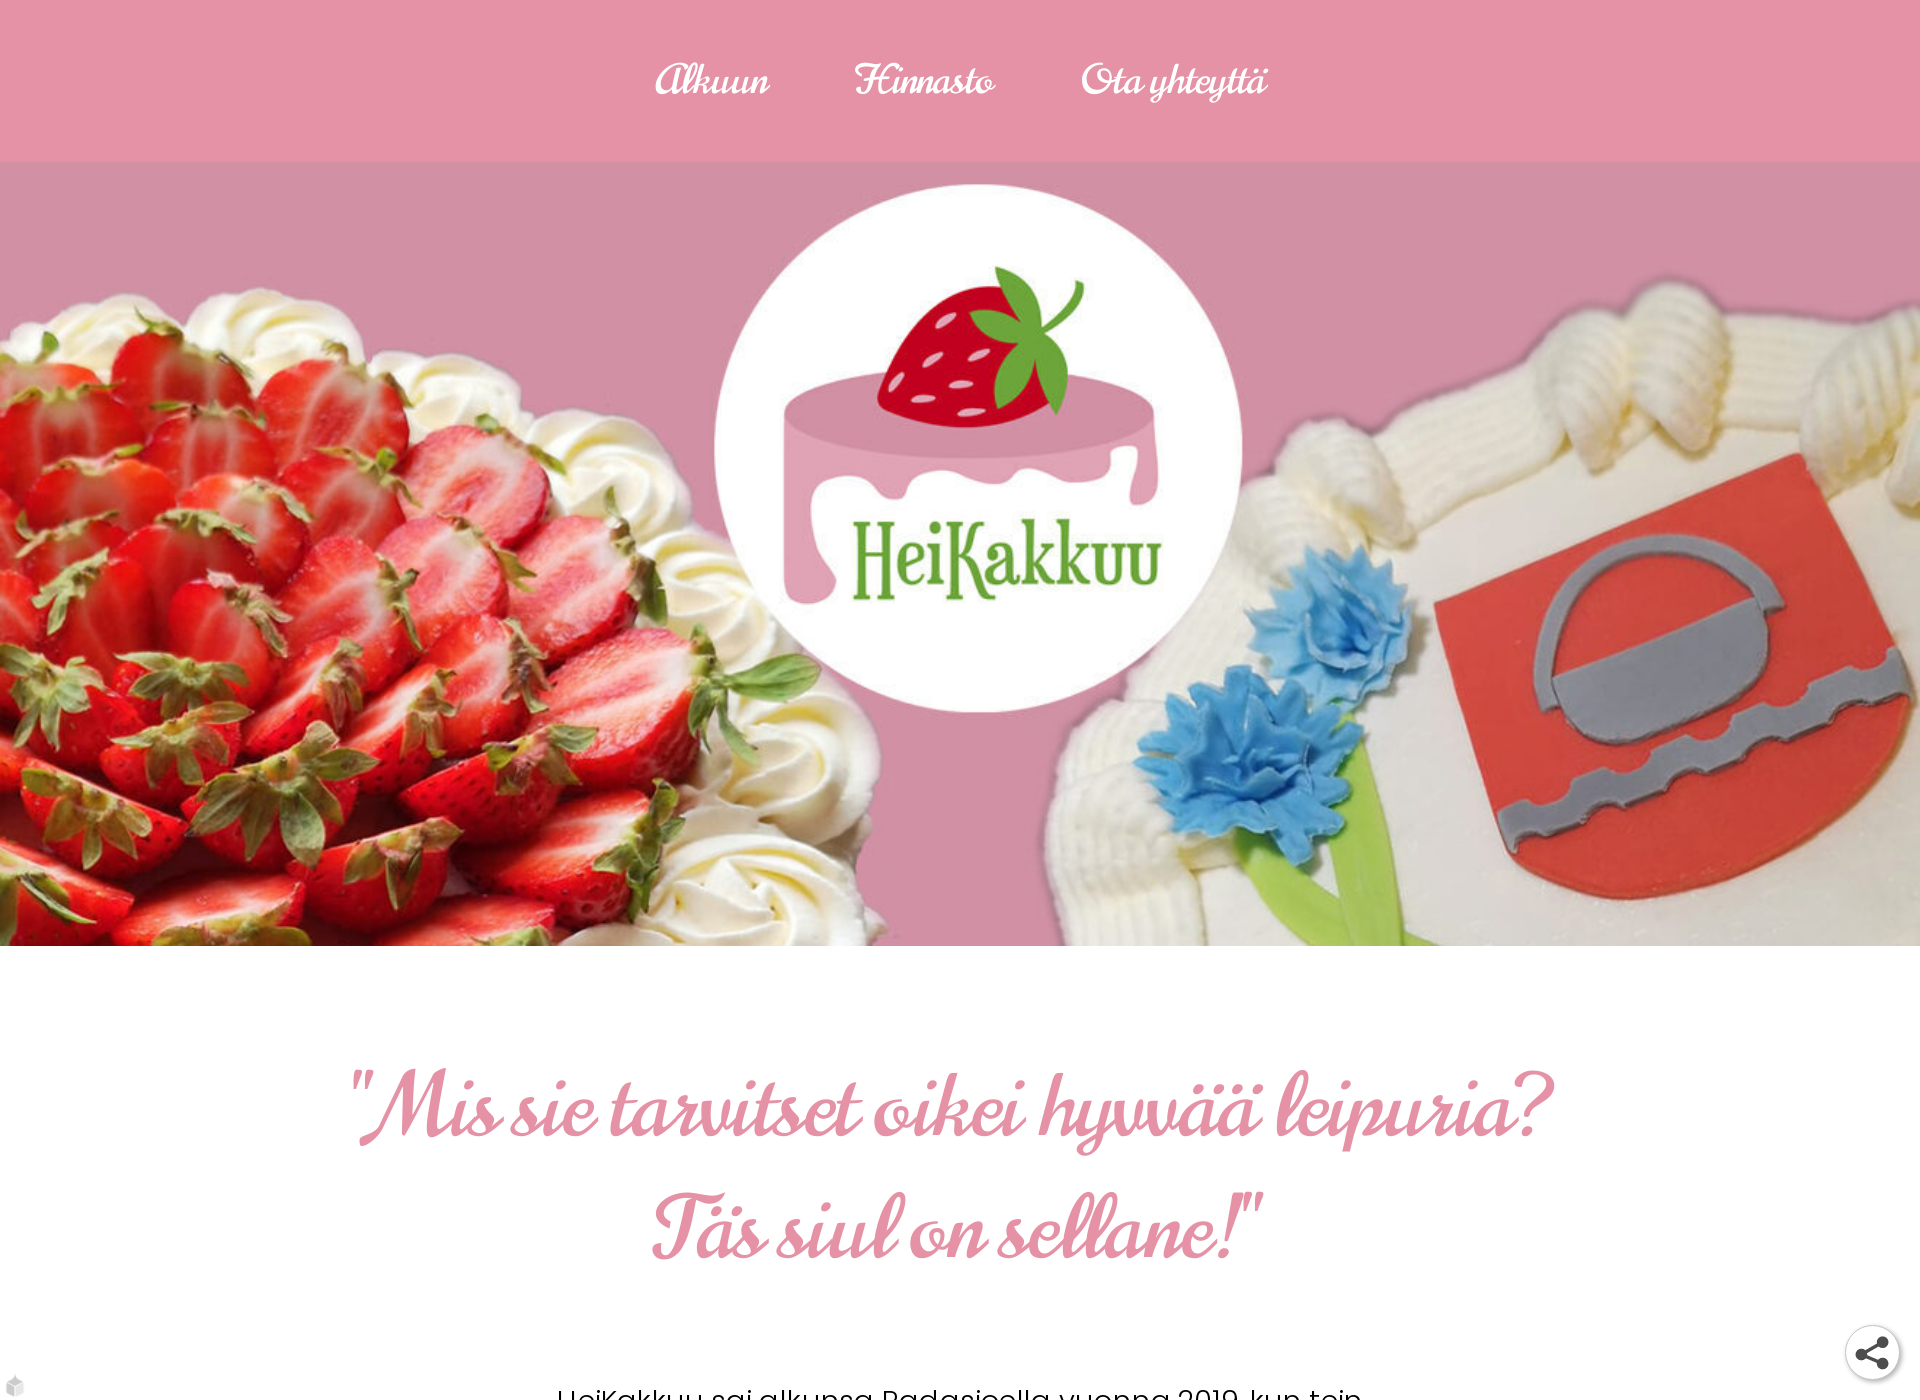 Skärmdump för heikakkuu.fi